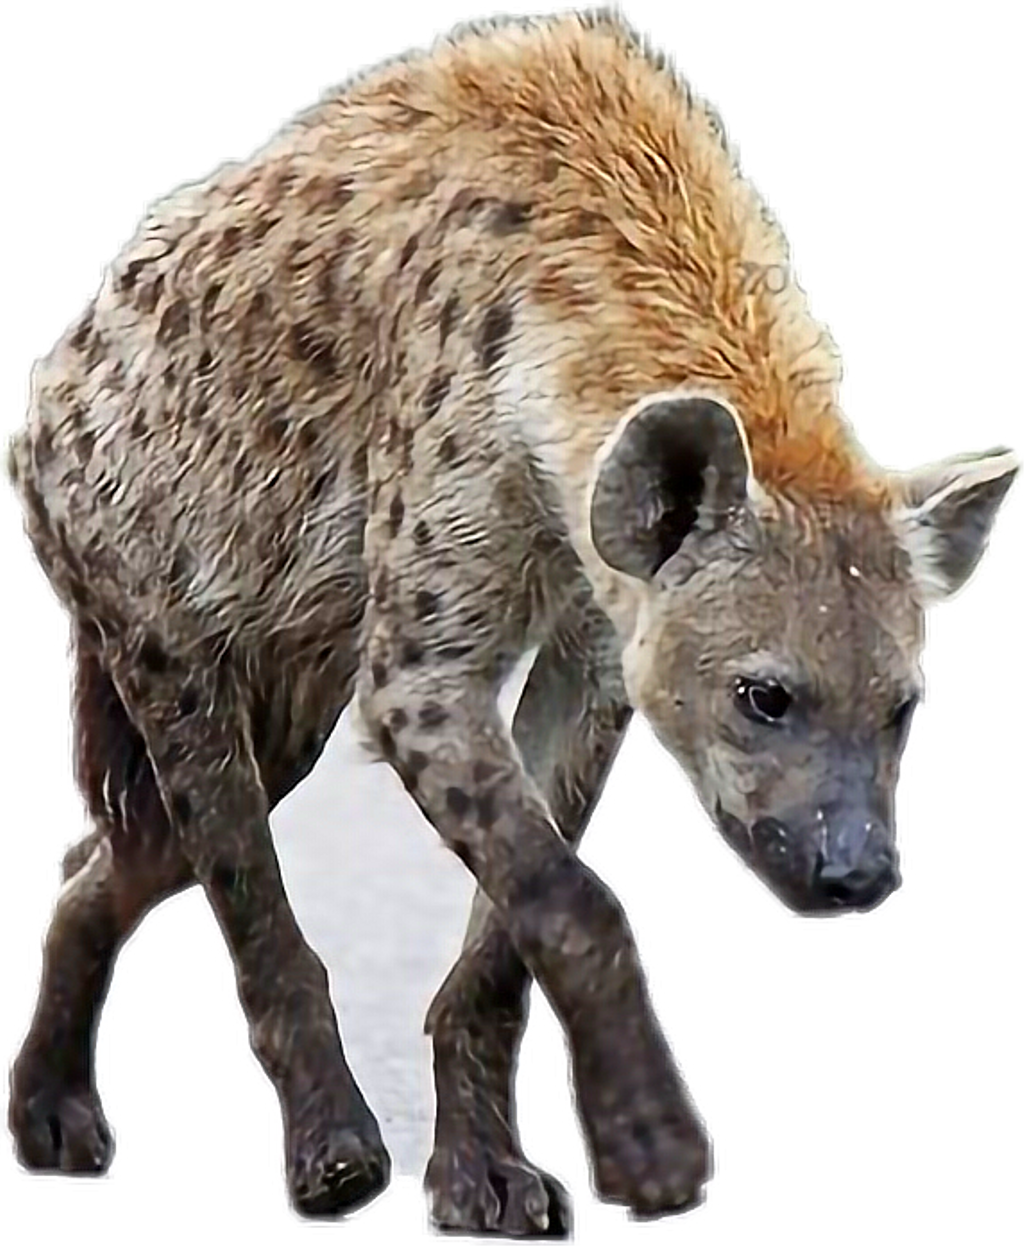 A Hyena Walking On The Ground